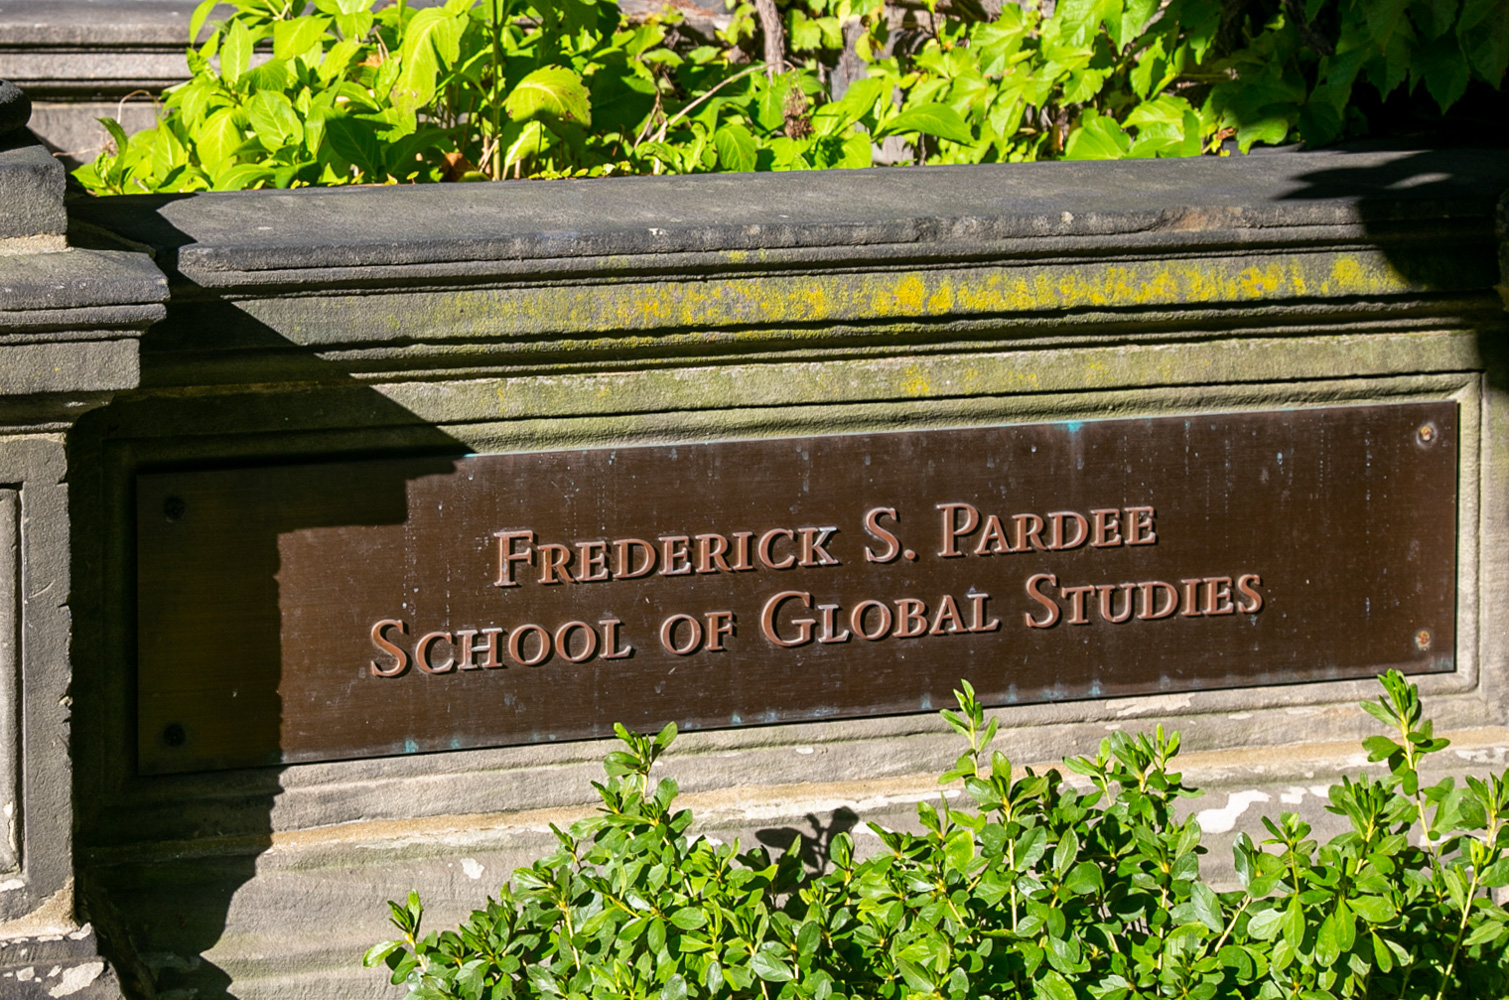 plaque reads "Frederick Pardee School of Global Studies"